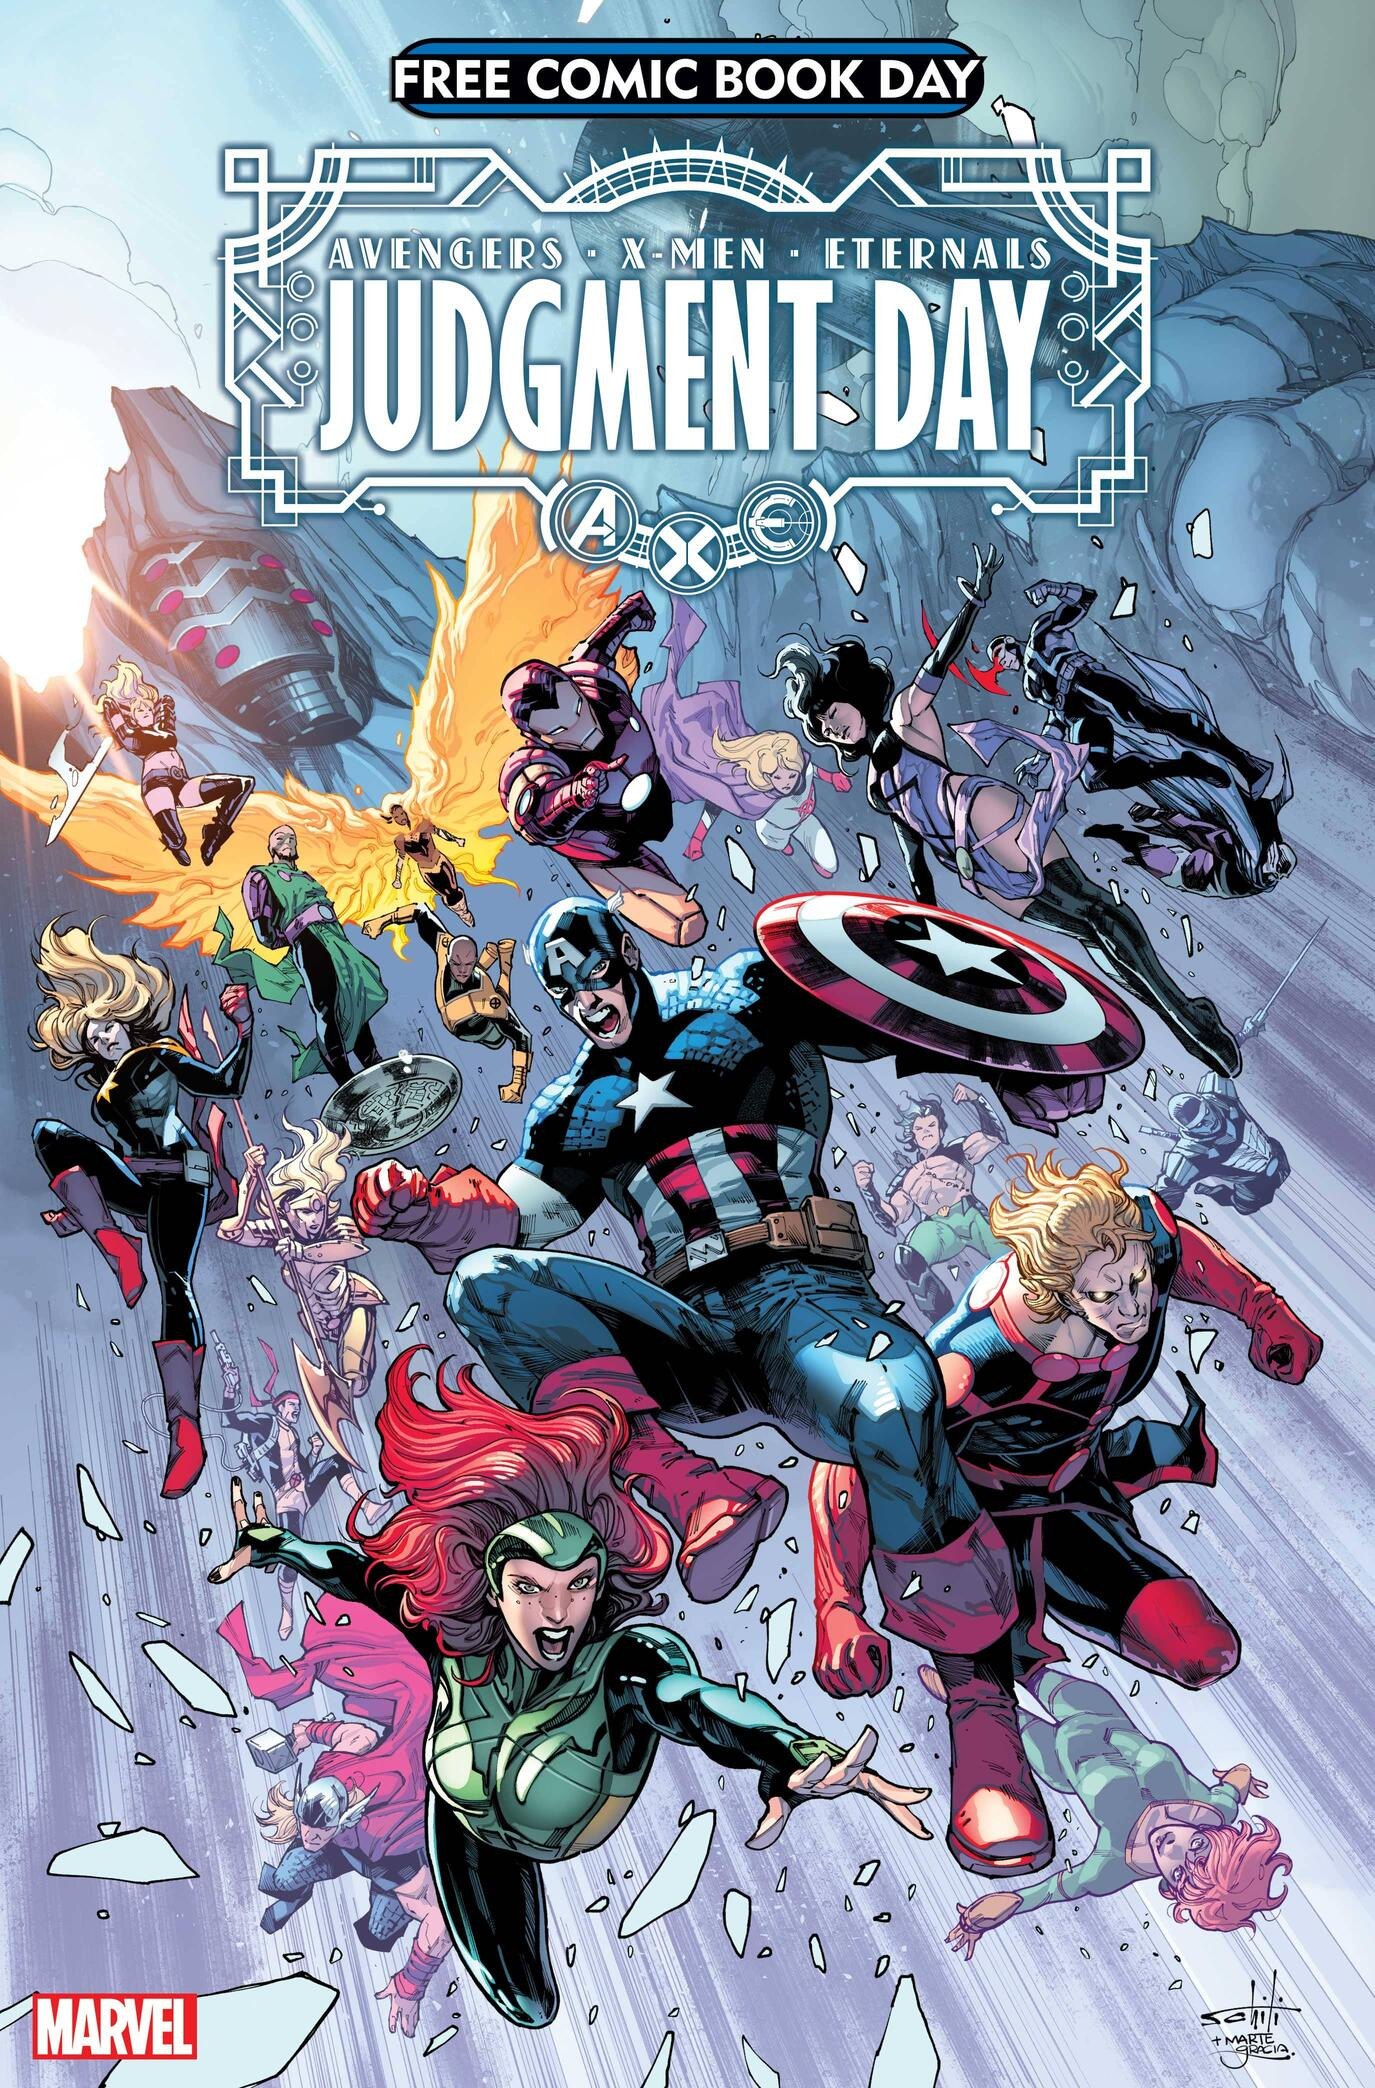 Avengers X-Men Free Comic Book Day